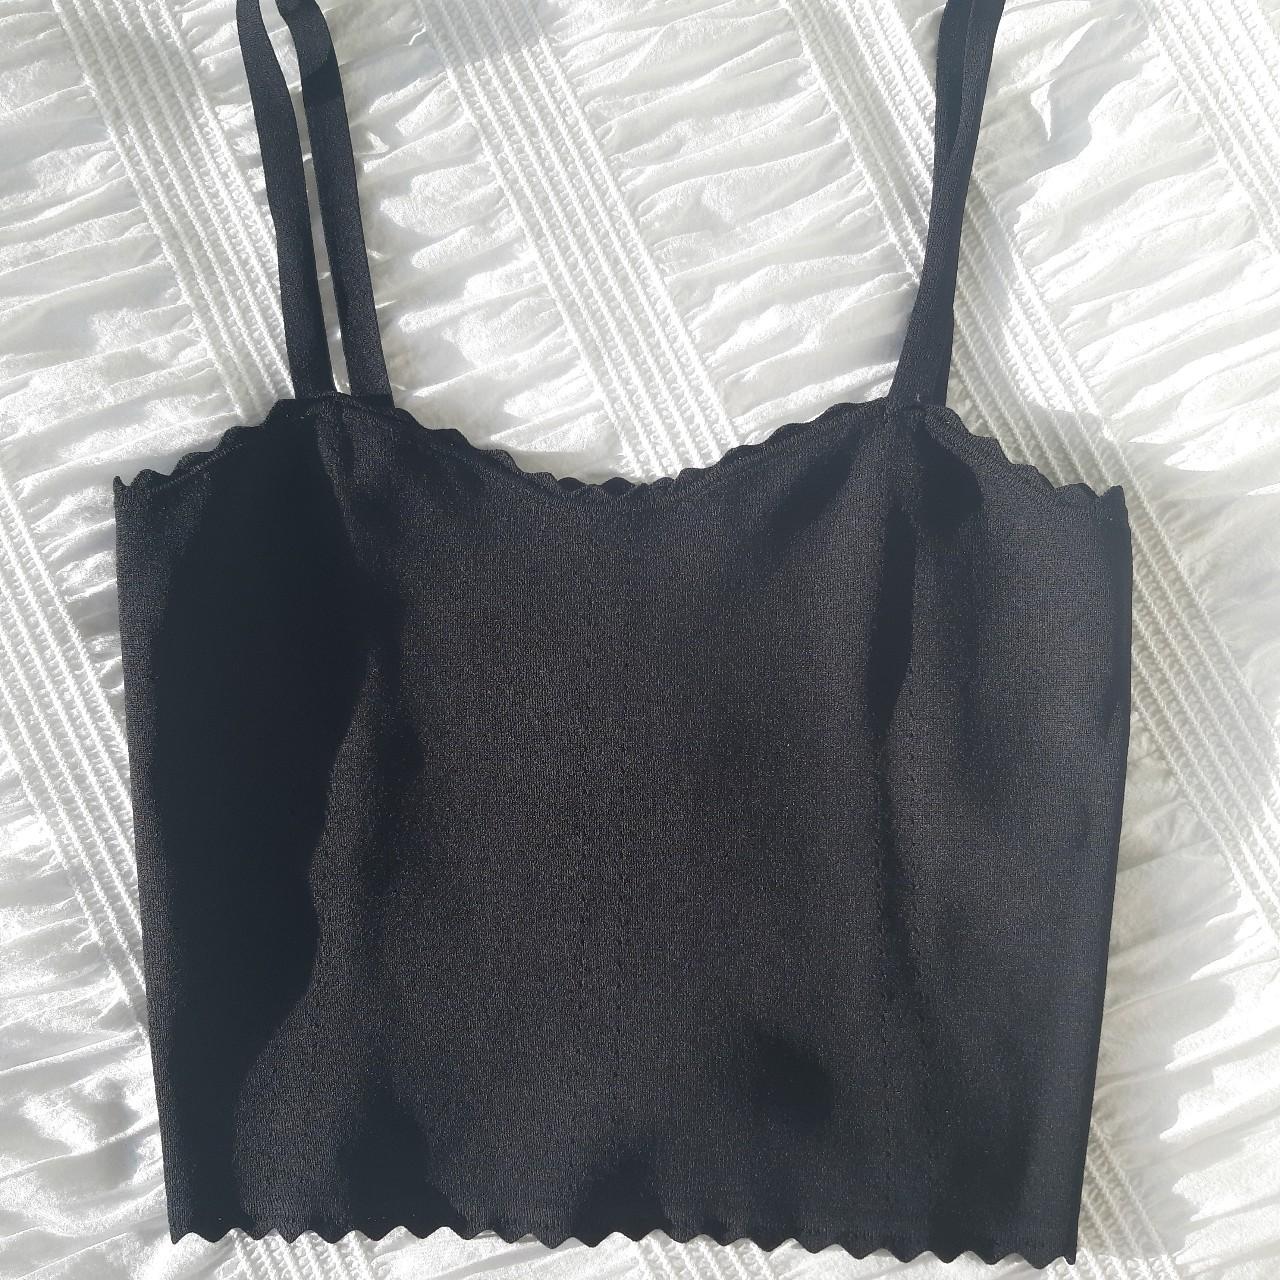 Zara black cami top with scalloped edges - Depop